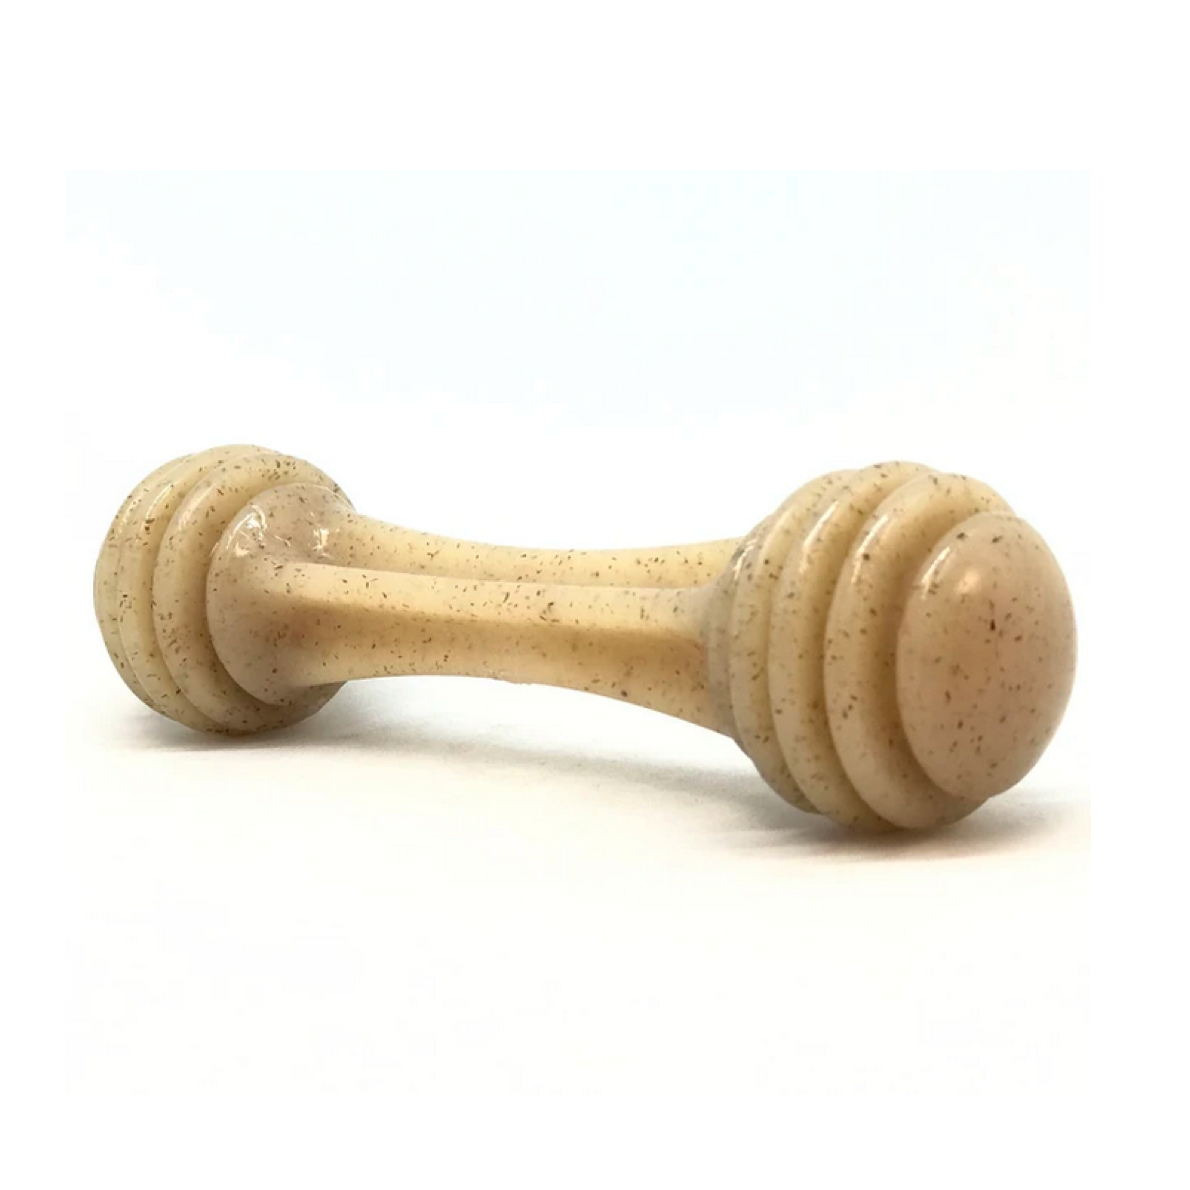 Honeybone - Durable Nylon Chew and Enrichment Toy